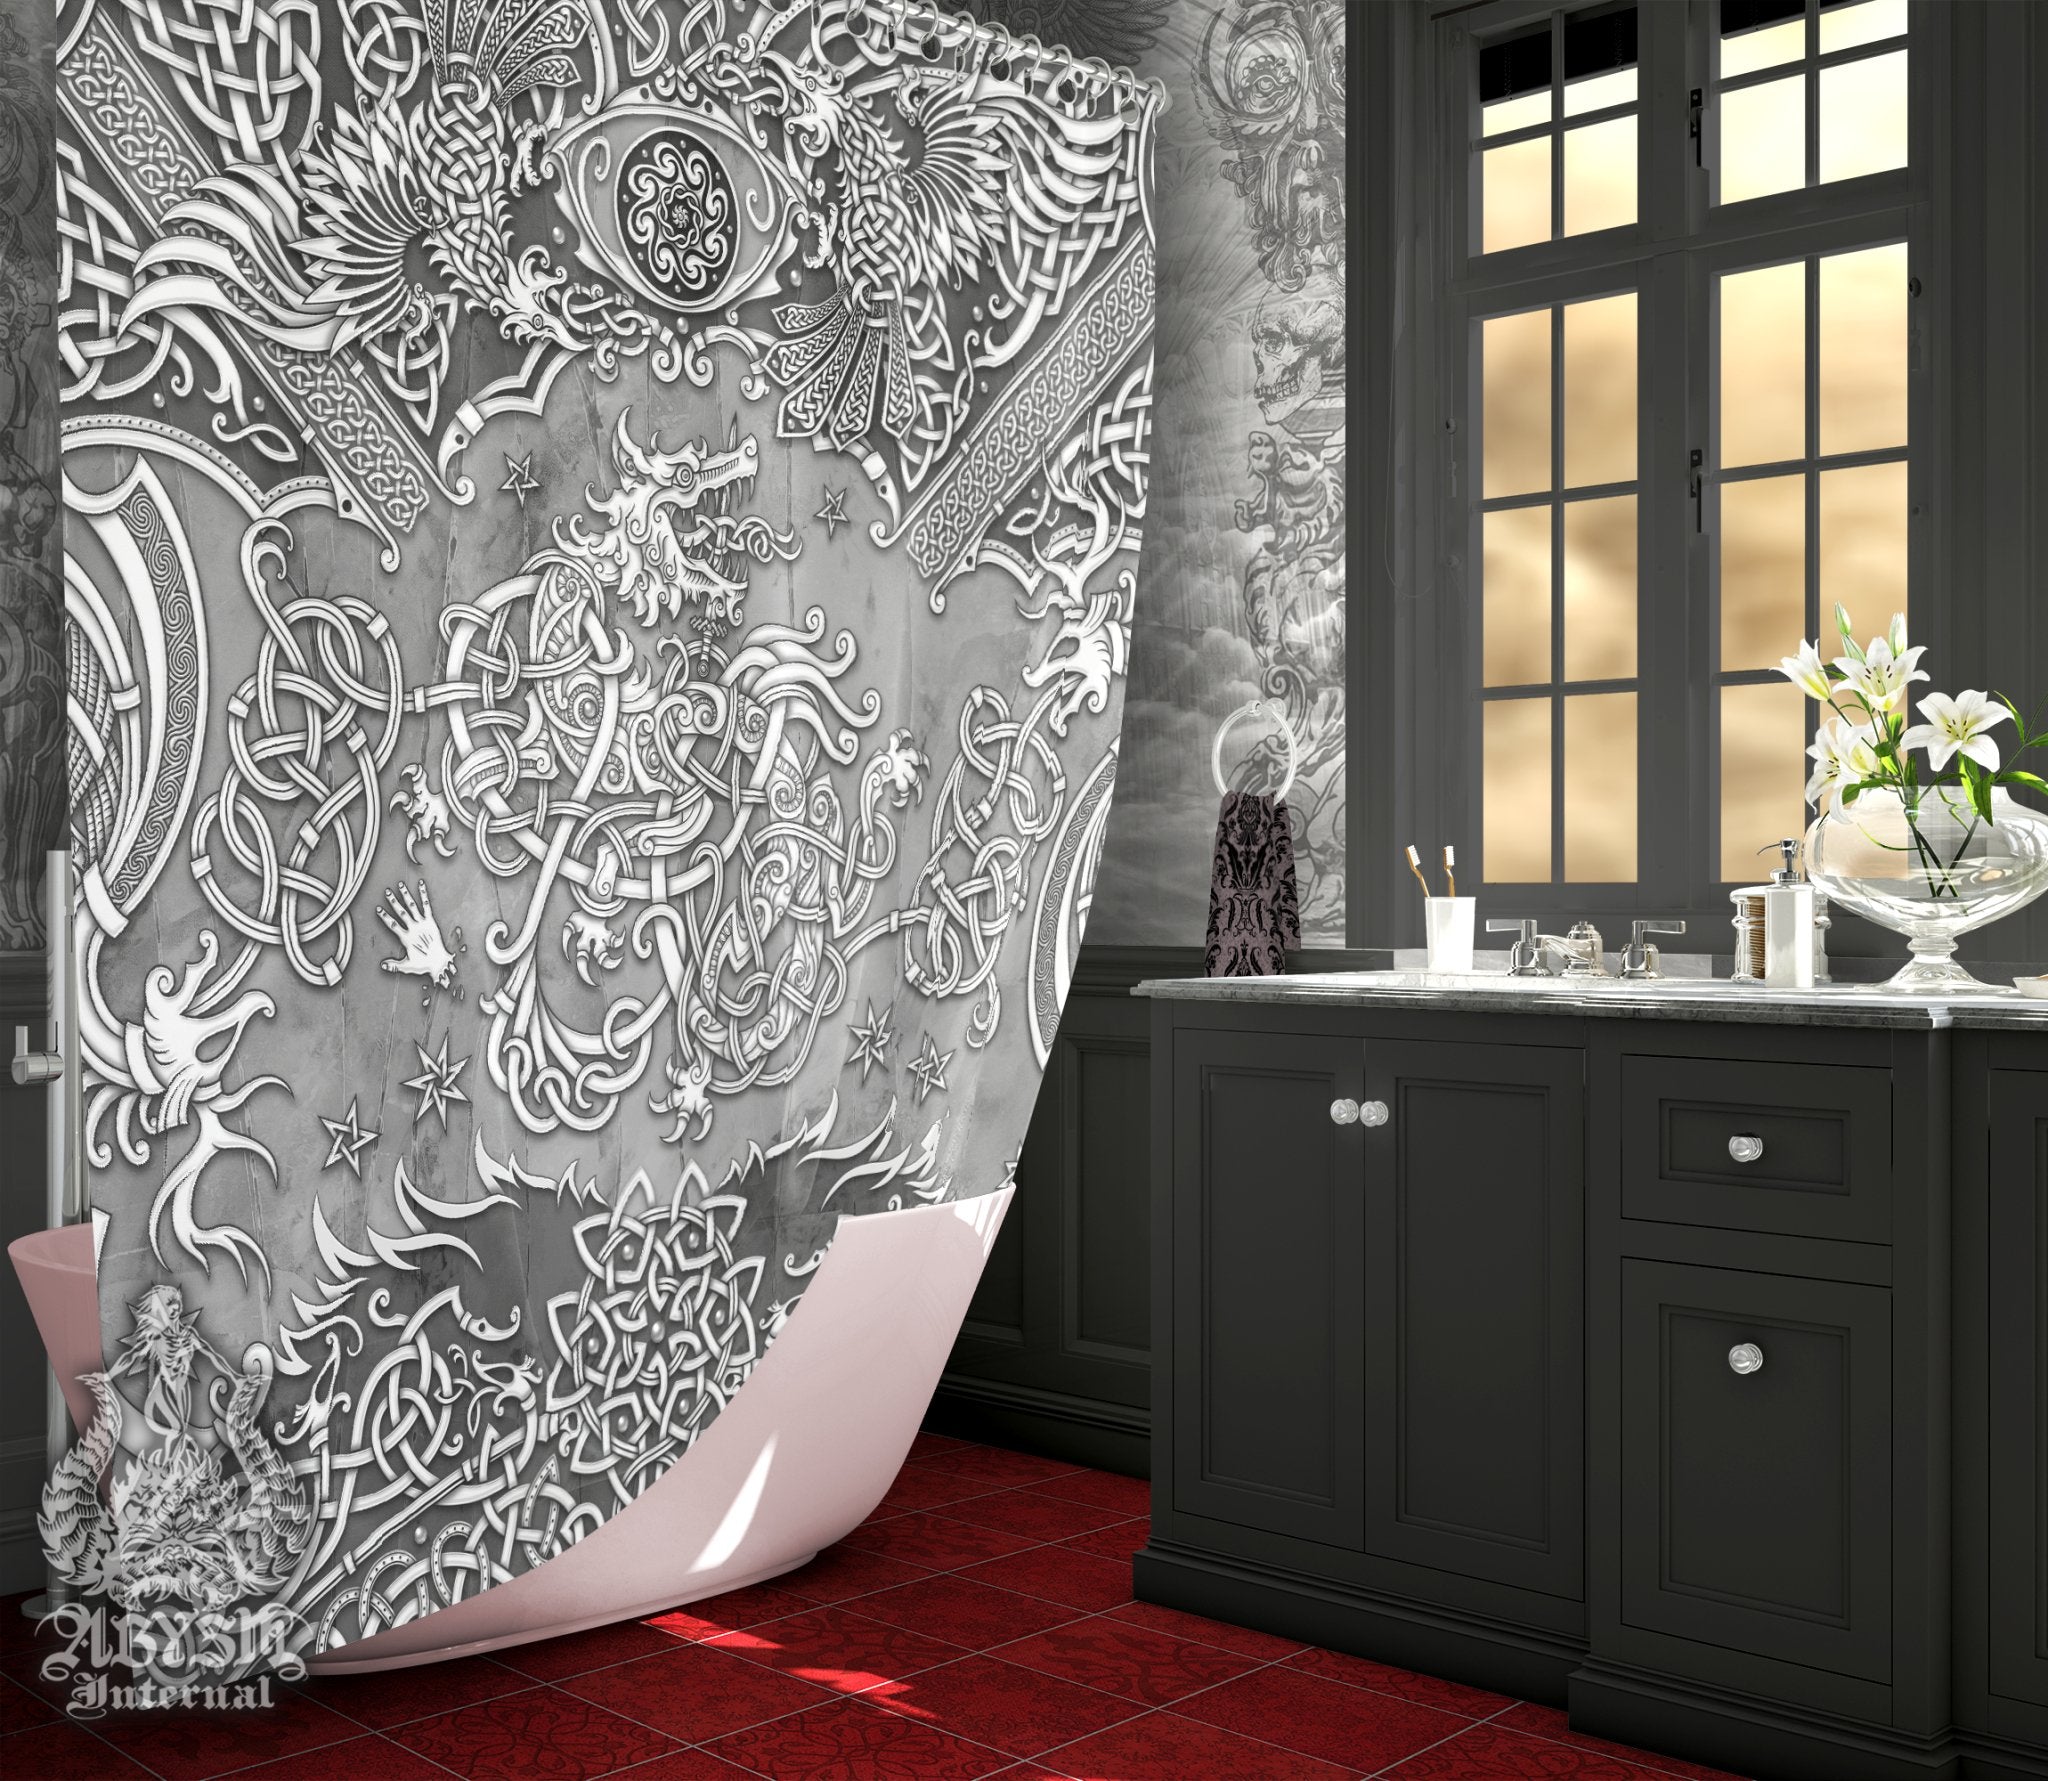 Nordic Wolf Shower Curtain, 71x74 inches, Old Norse Bathroom Decor, Viking Fenrir Art Print - Stone - Abysm Internal